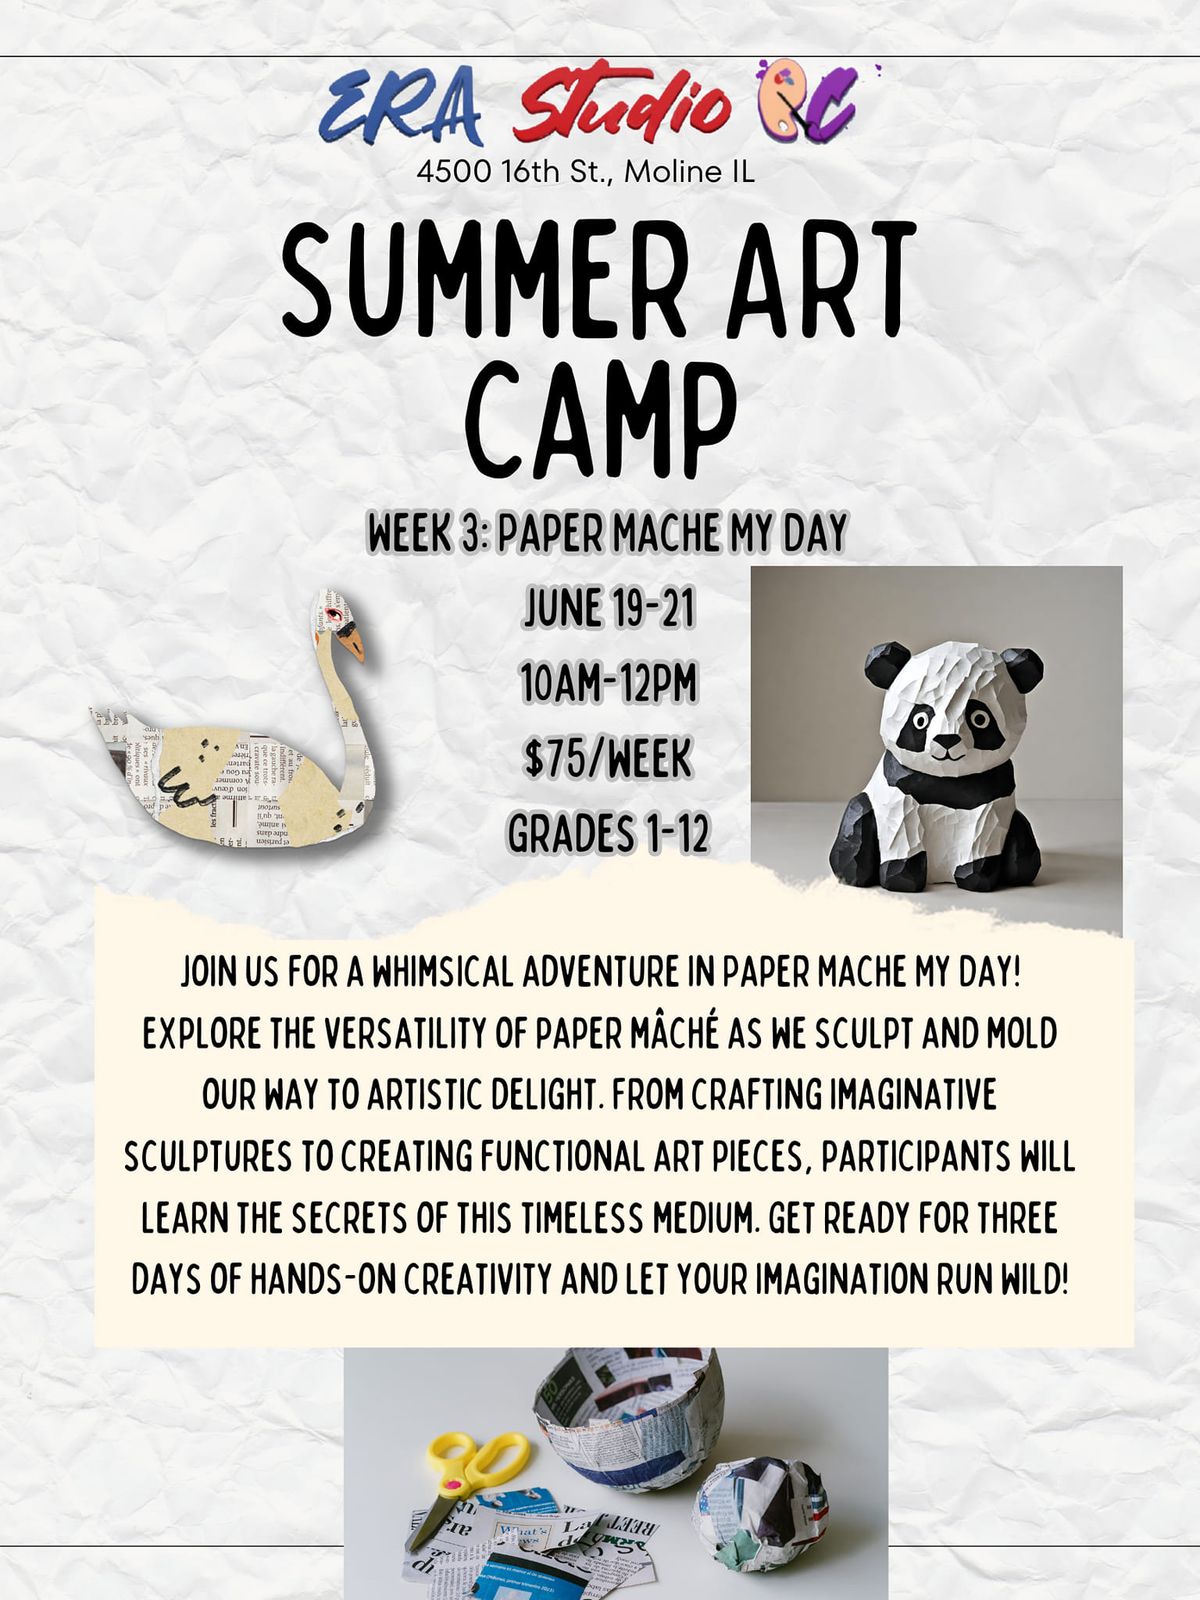 Summer ART Camp: Paper Mache My Day 